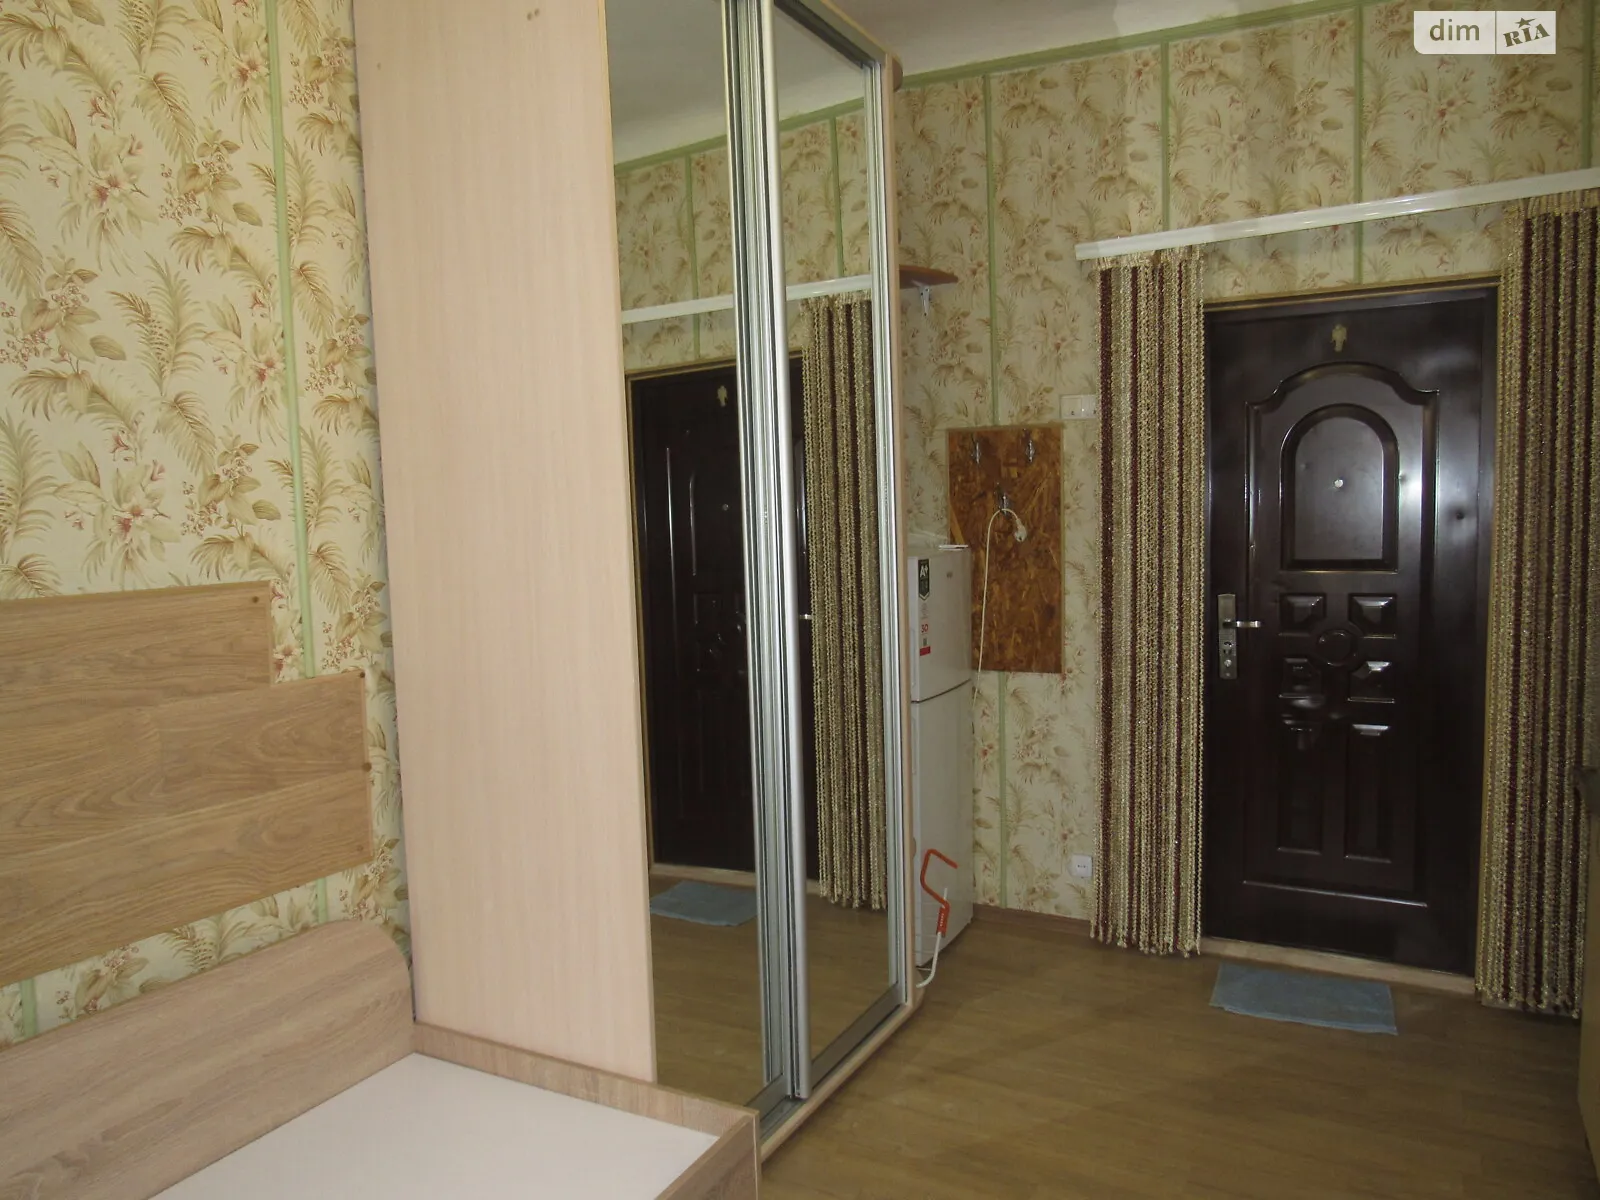 Продается комната 15 кв. м в Николаеве - фото 4